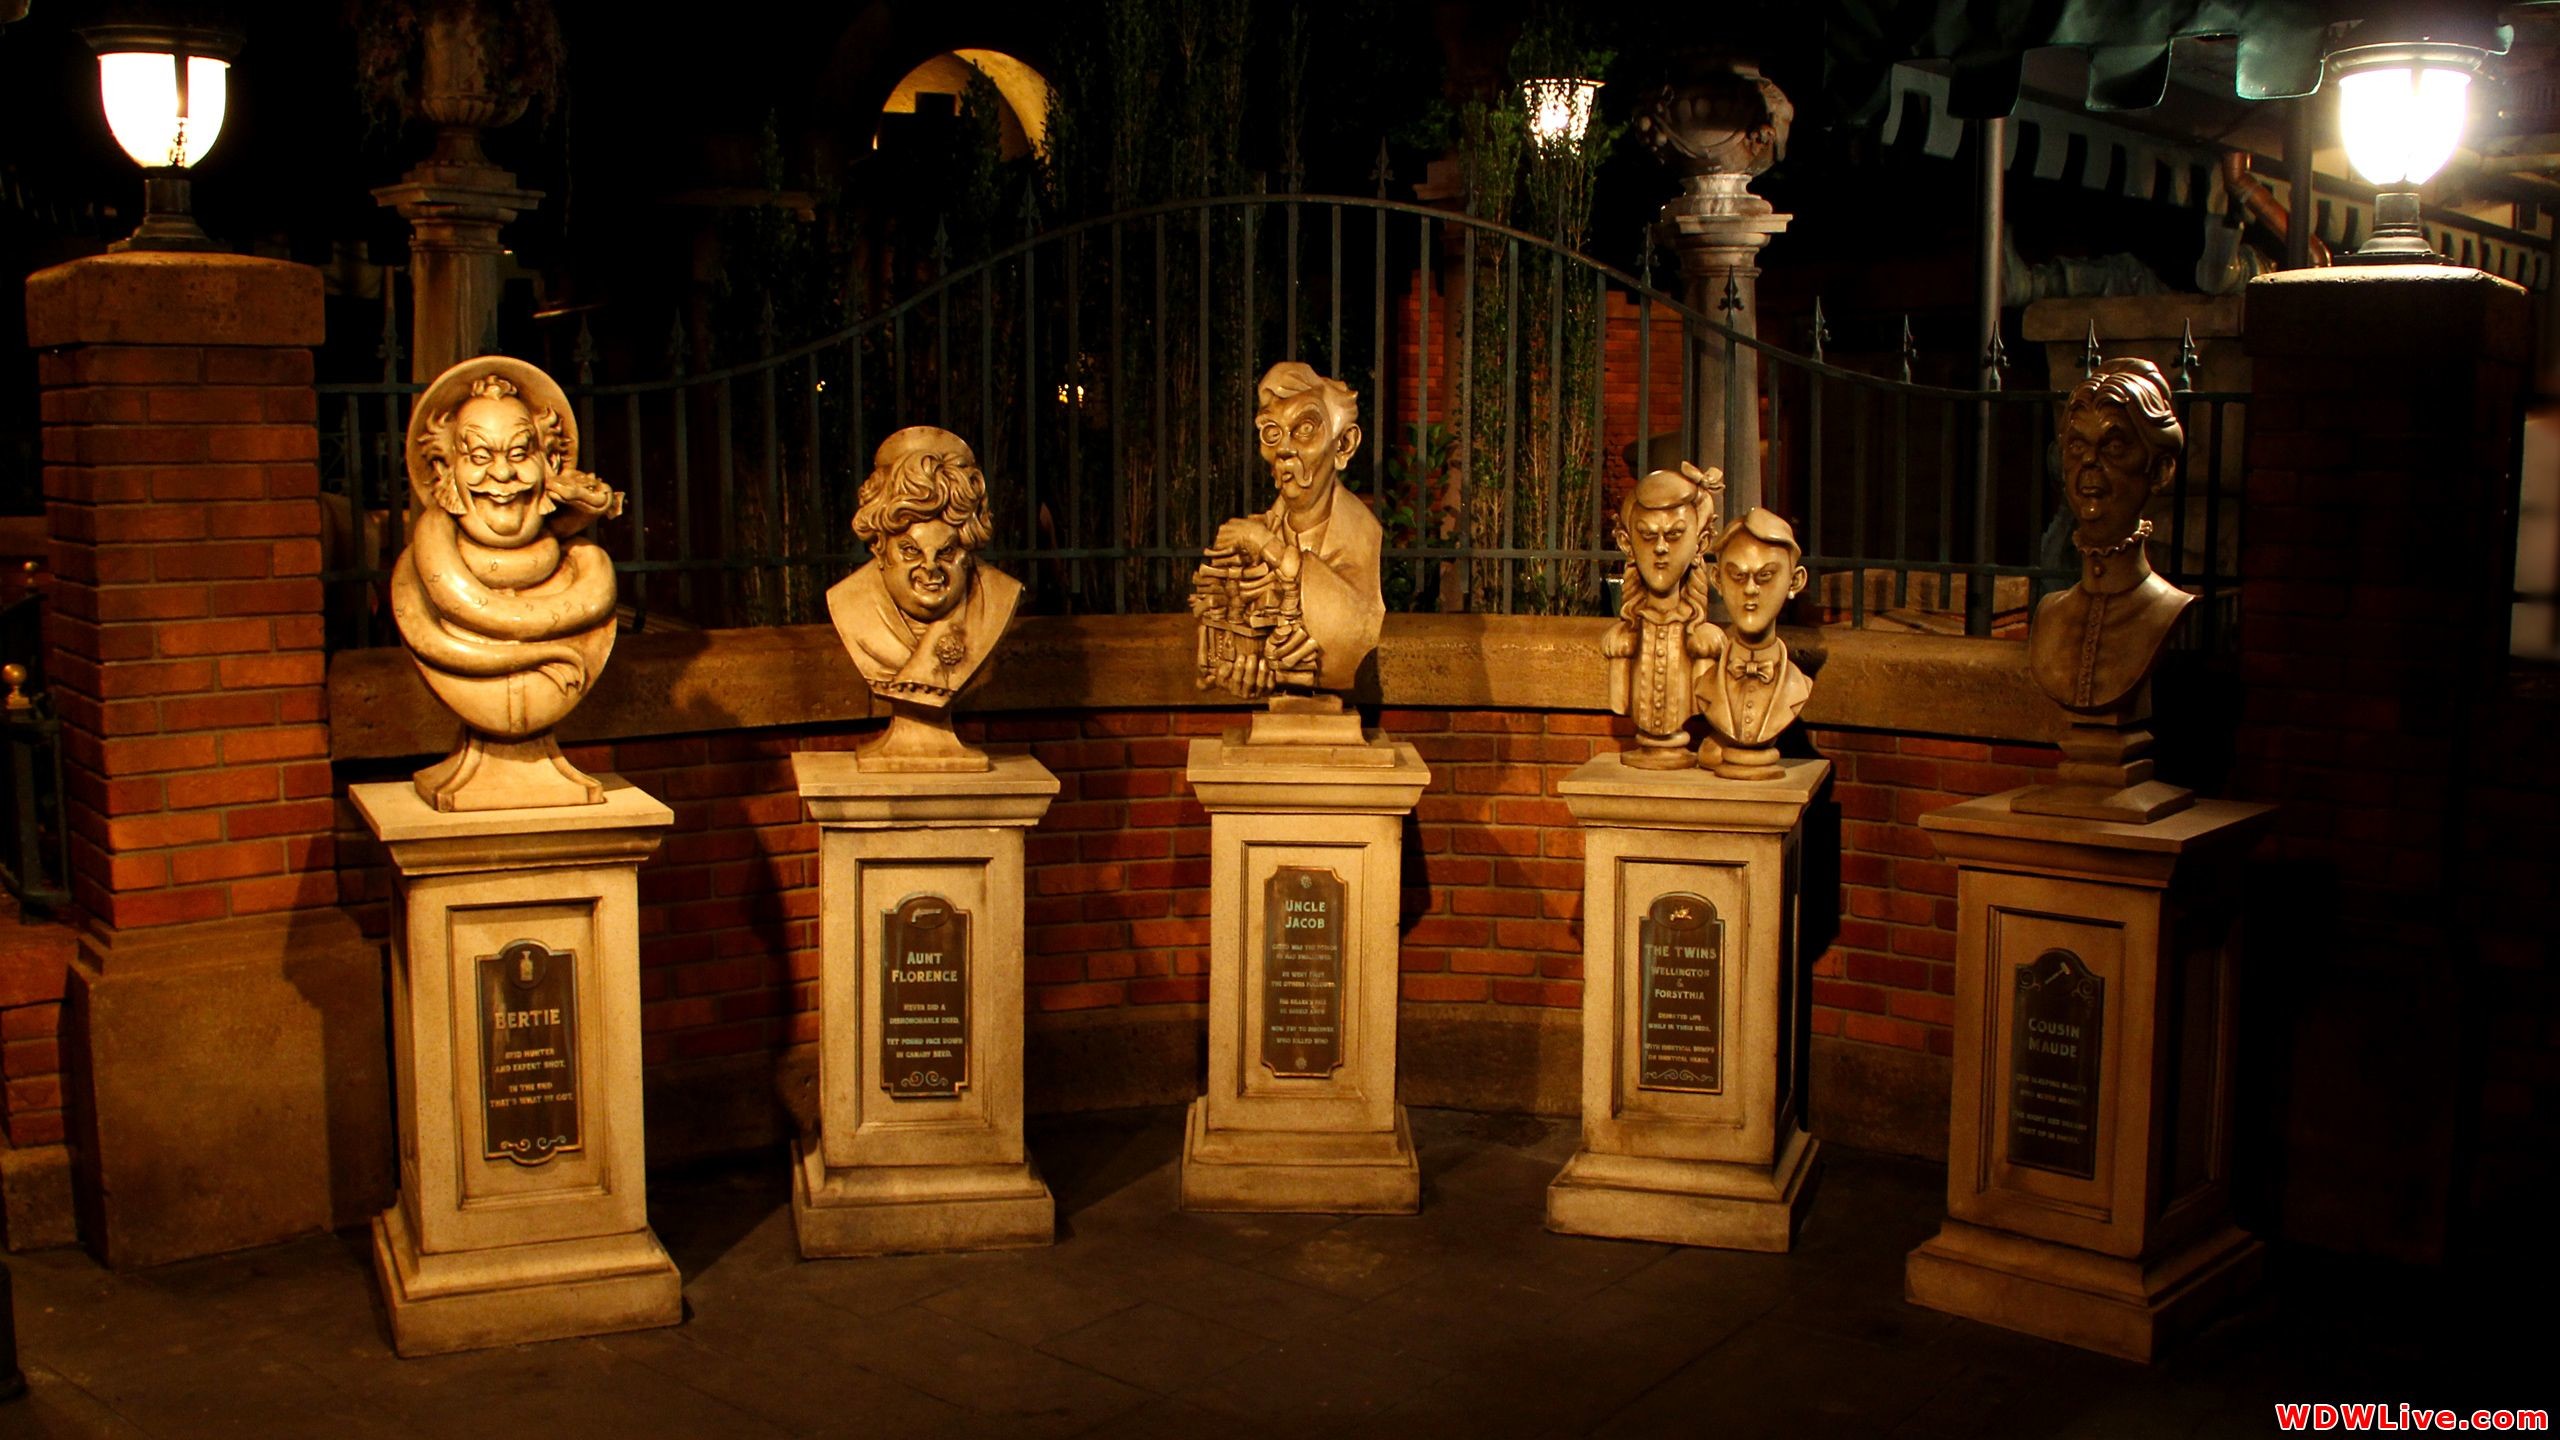 2560x1440 The Haunted Mansion Desktop Wallpaper Disney World Rides, Haunted Mansion,  Magic Kingdom, Disneyland